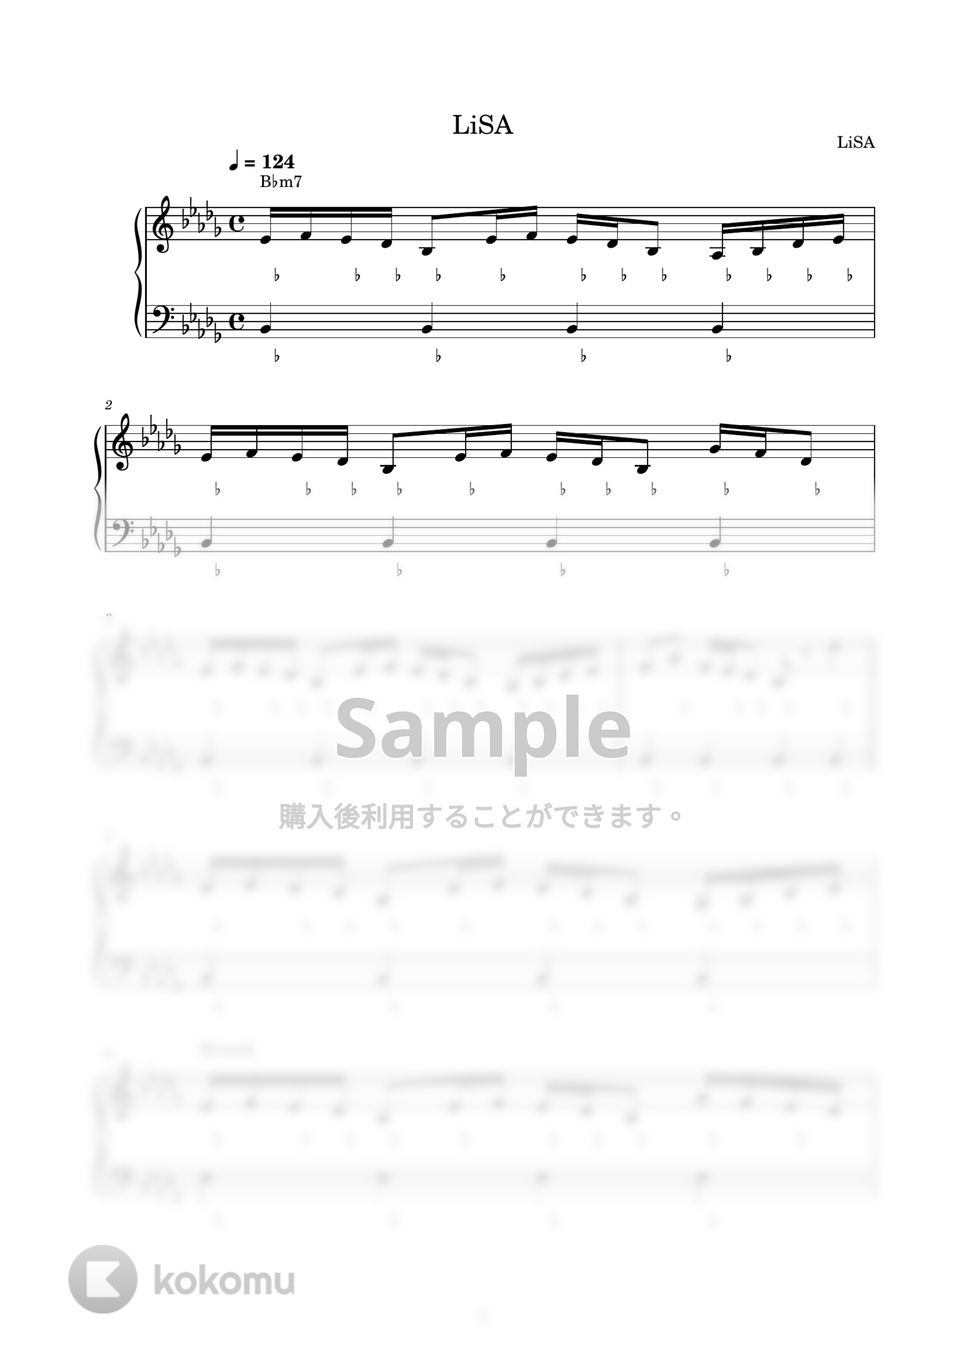 LiSA - 一斉ノ喝采 (ピアノ楽譜 / かんたん両手 / 歌詞付き / ドレミ付き / 初心者向き) by piano.tokyo